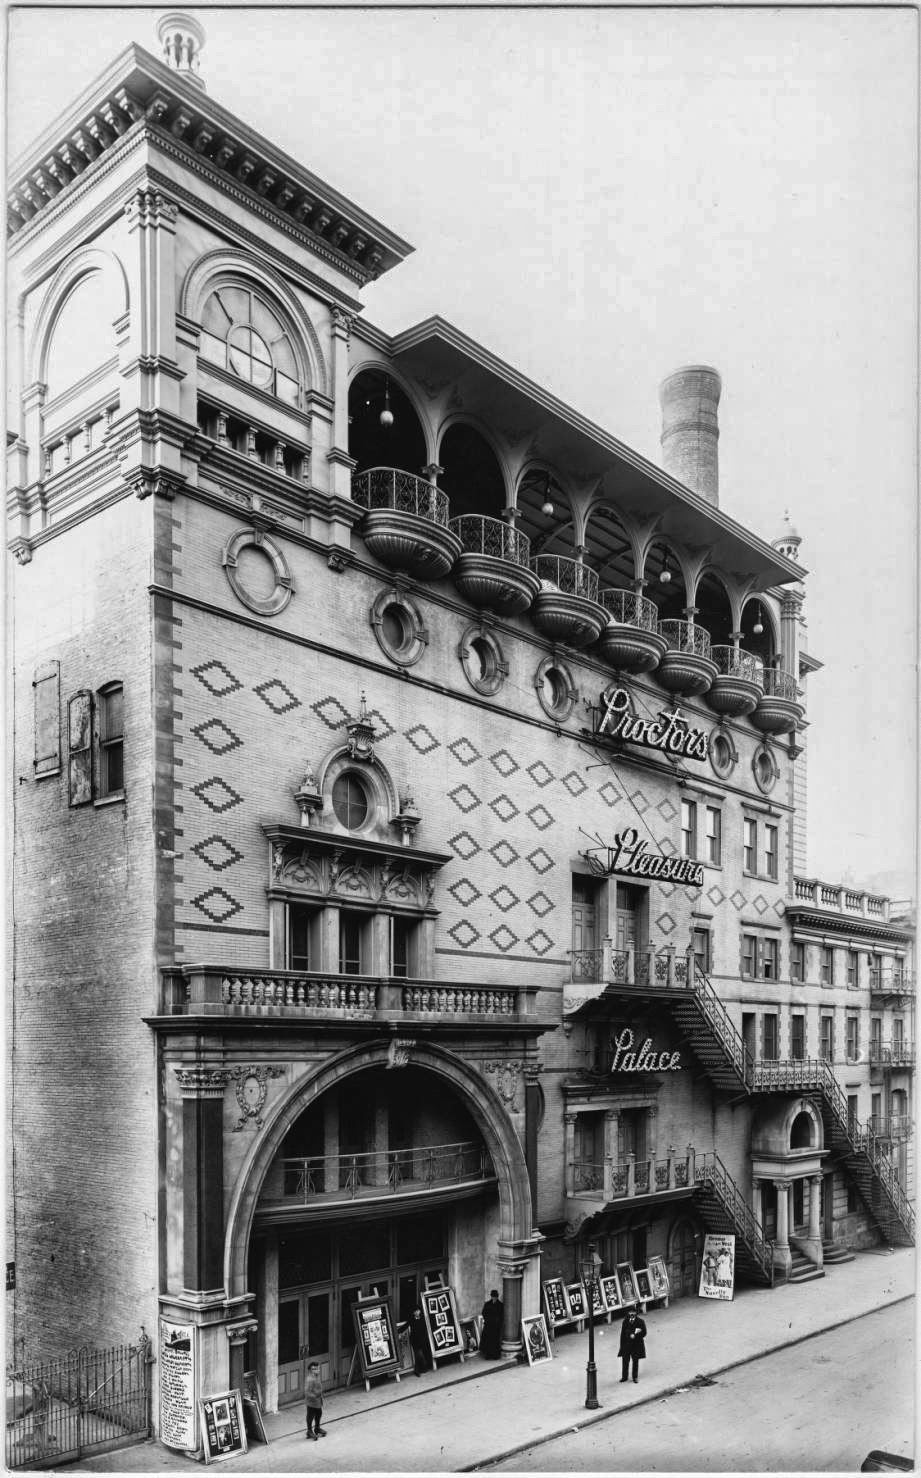 Proctor’s Pleasure Palace, 58th Street and Lexington Avenue, 1895